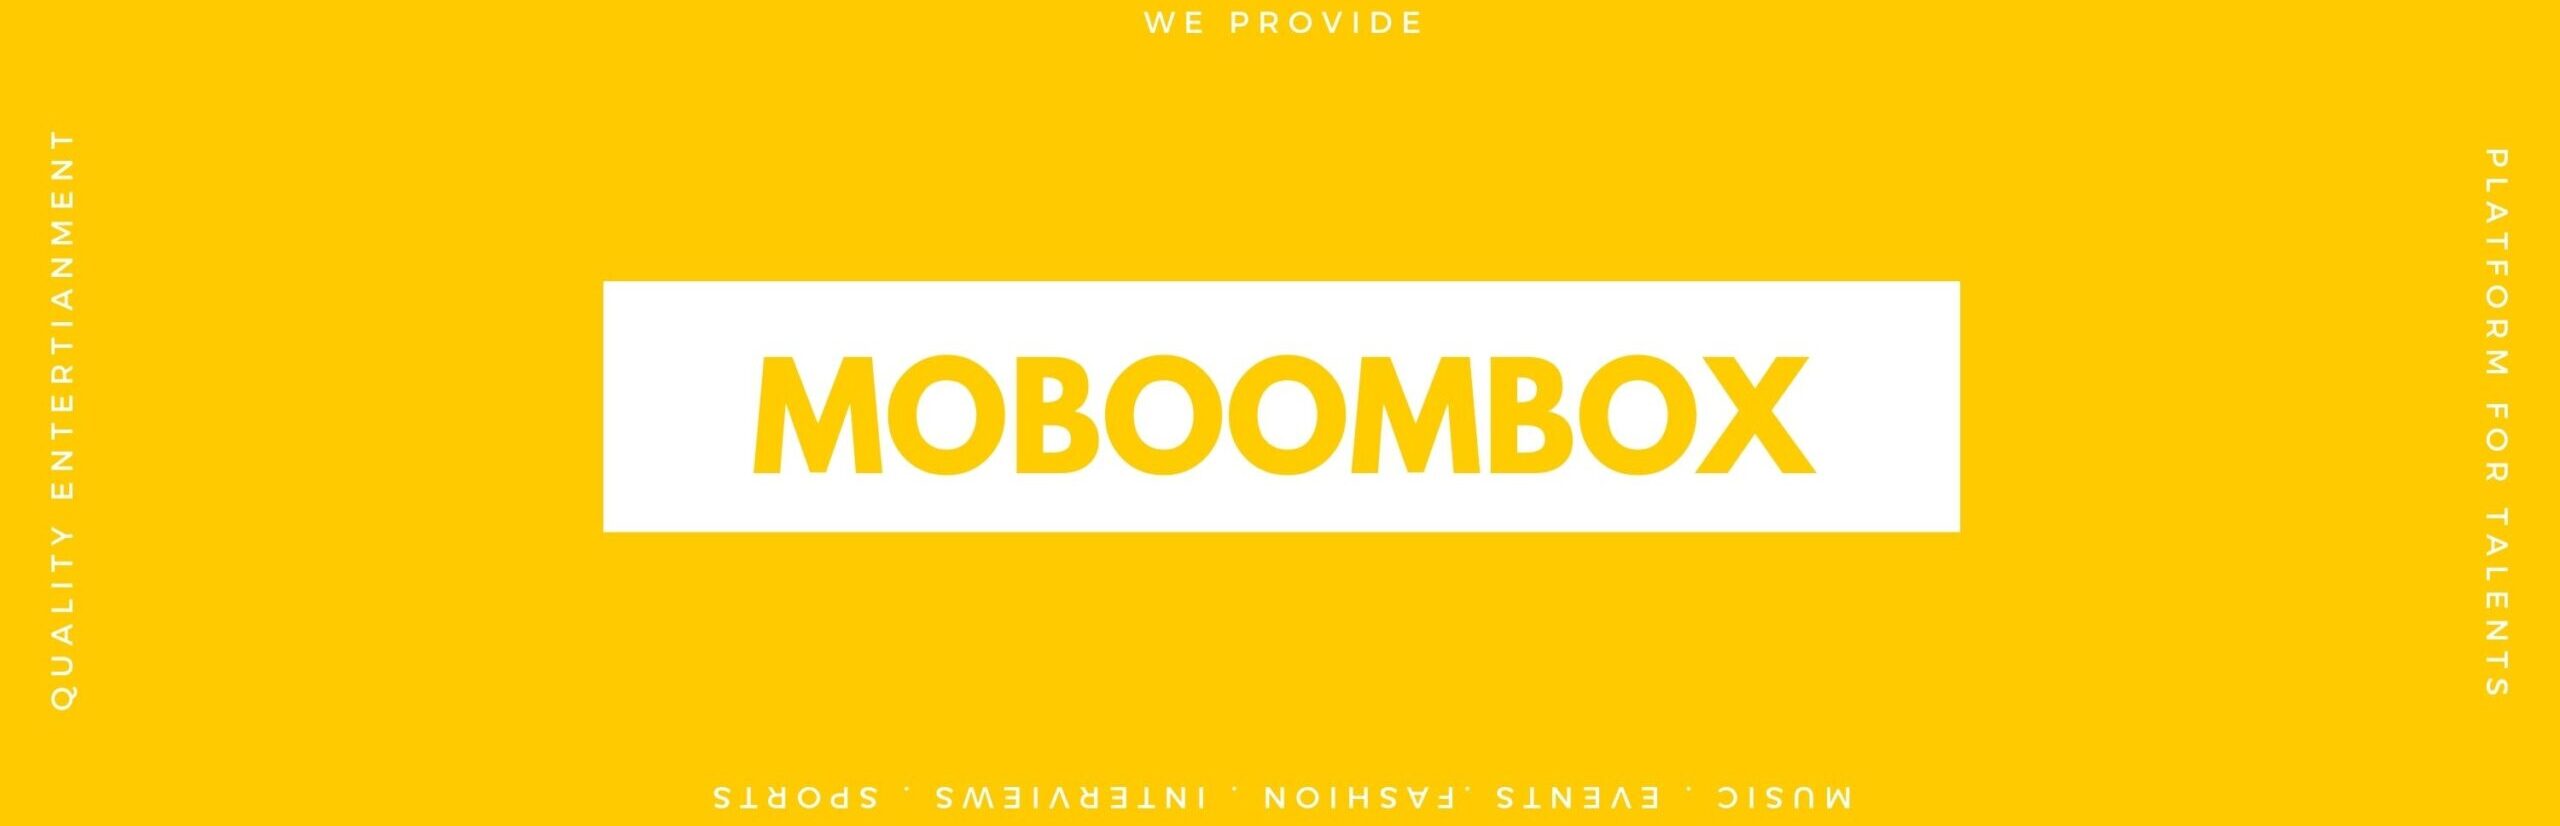 MOBoombox.com